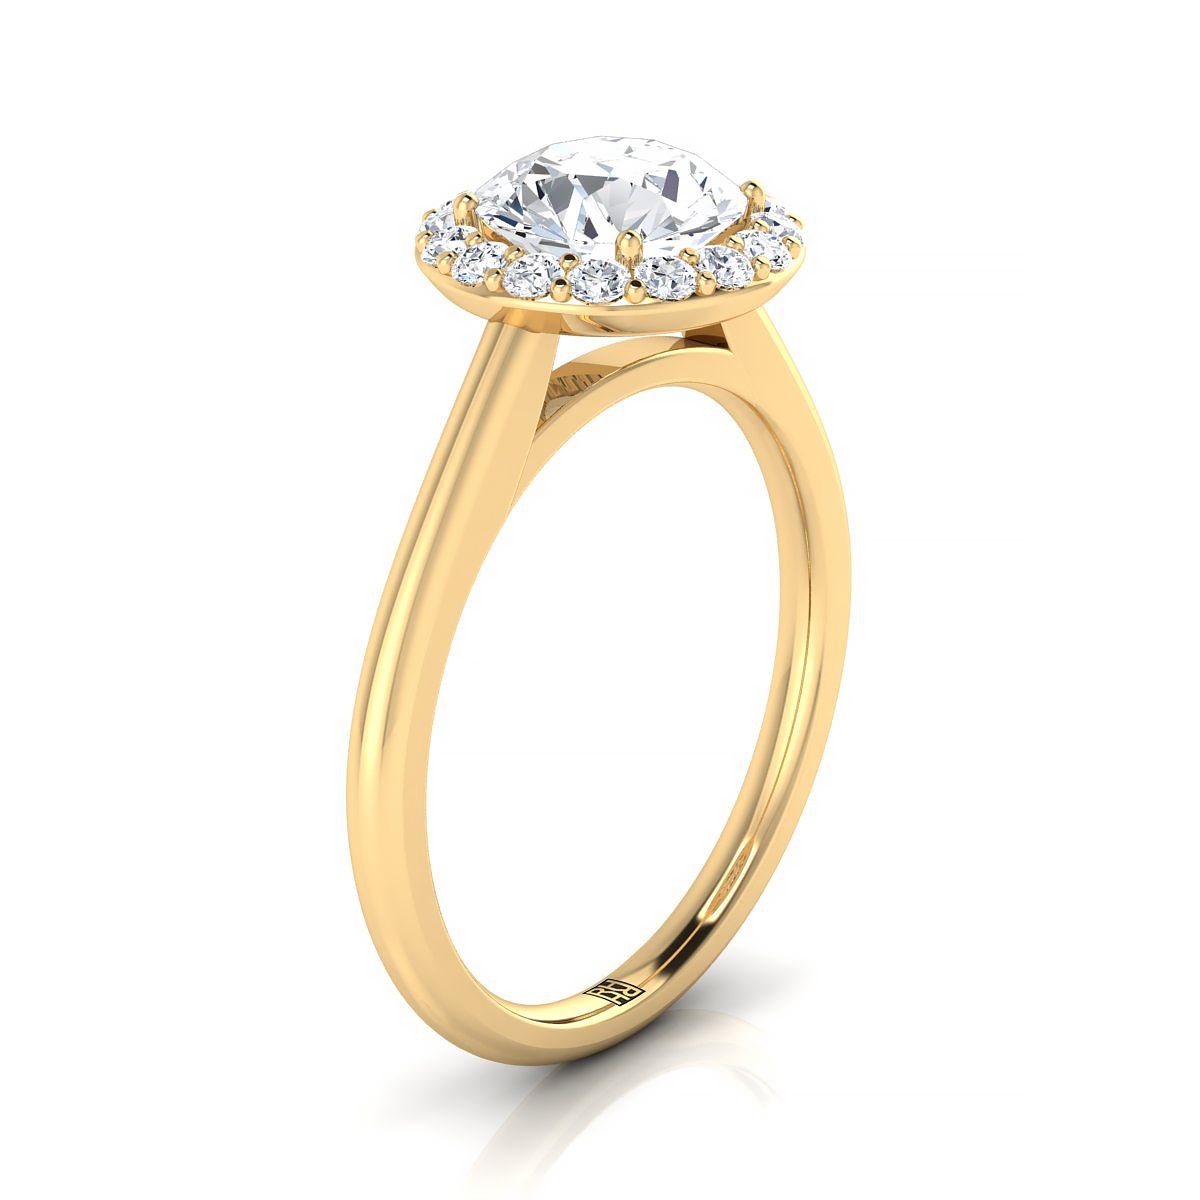 18K สีเหลืองทอง Round Brilliant Ruby Shared Prong Diamond Halo แหวนหมั้น -1/5ctw